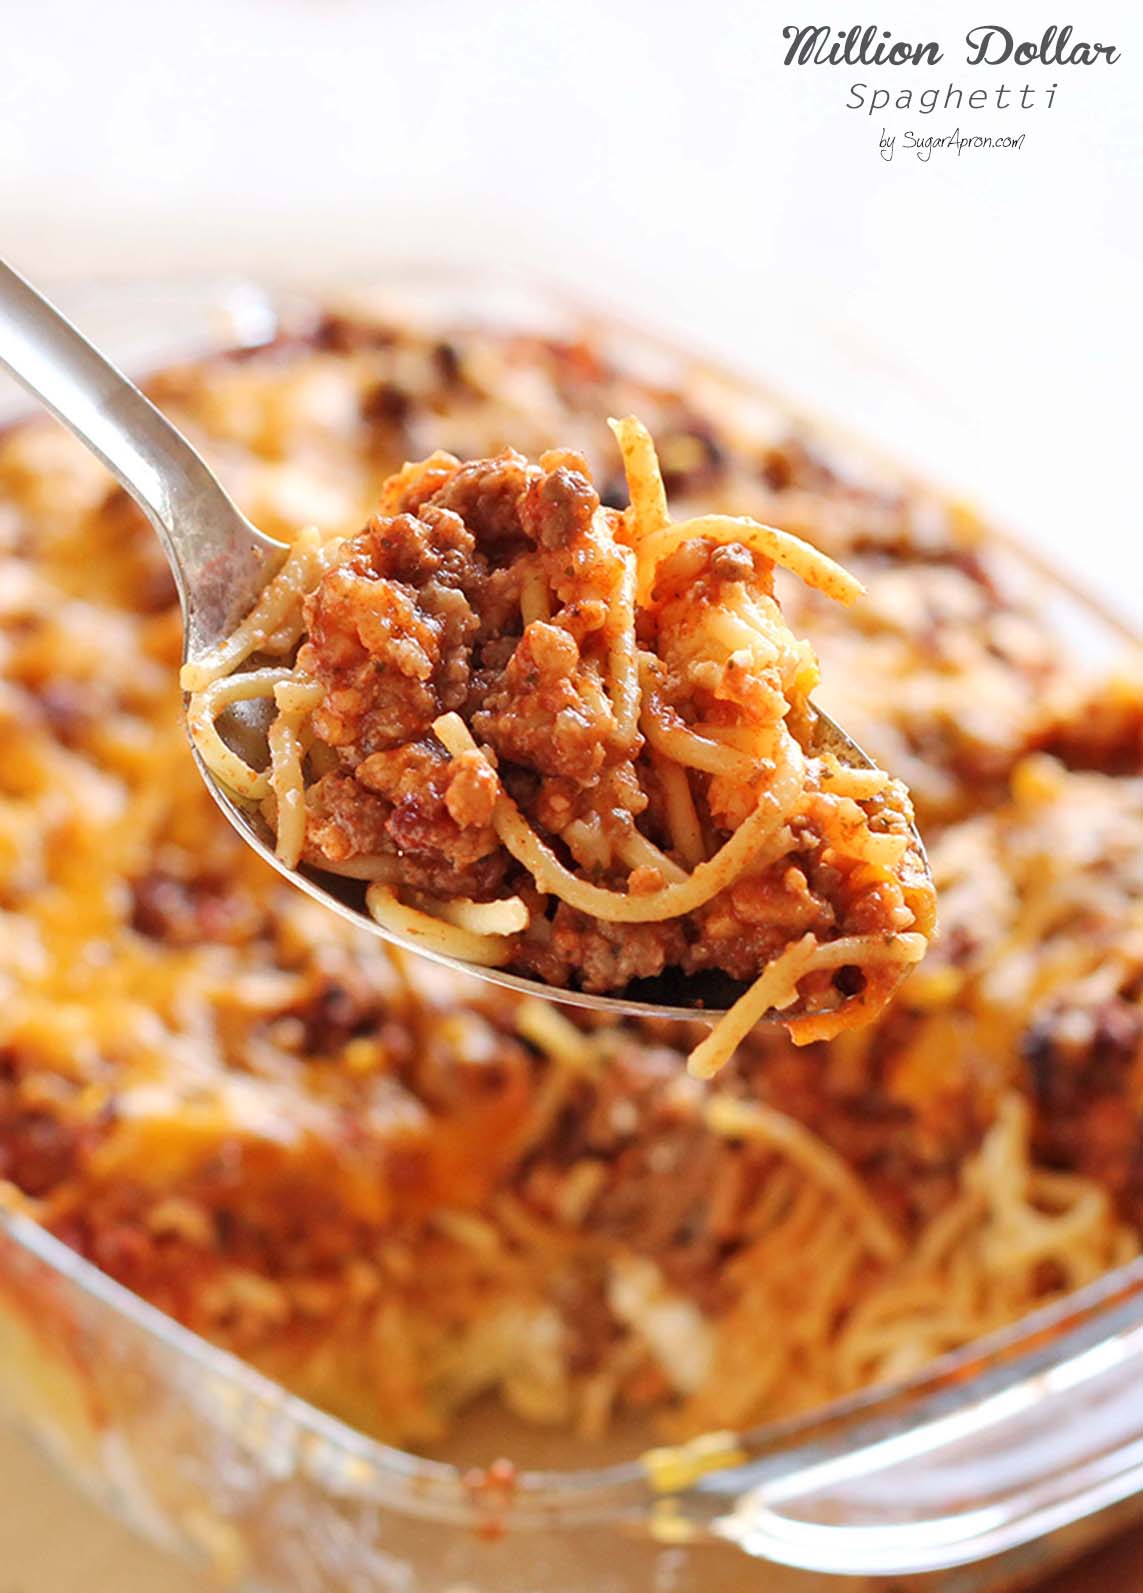 Spaghetti, spaghetti sauce, beef and cream cheese mixture meal ... that tastes like a million bucks.